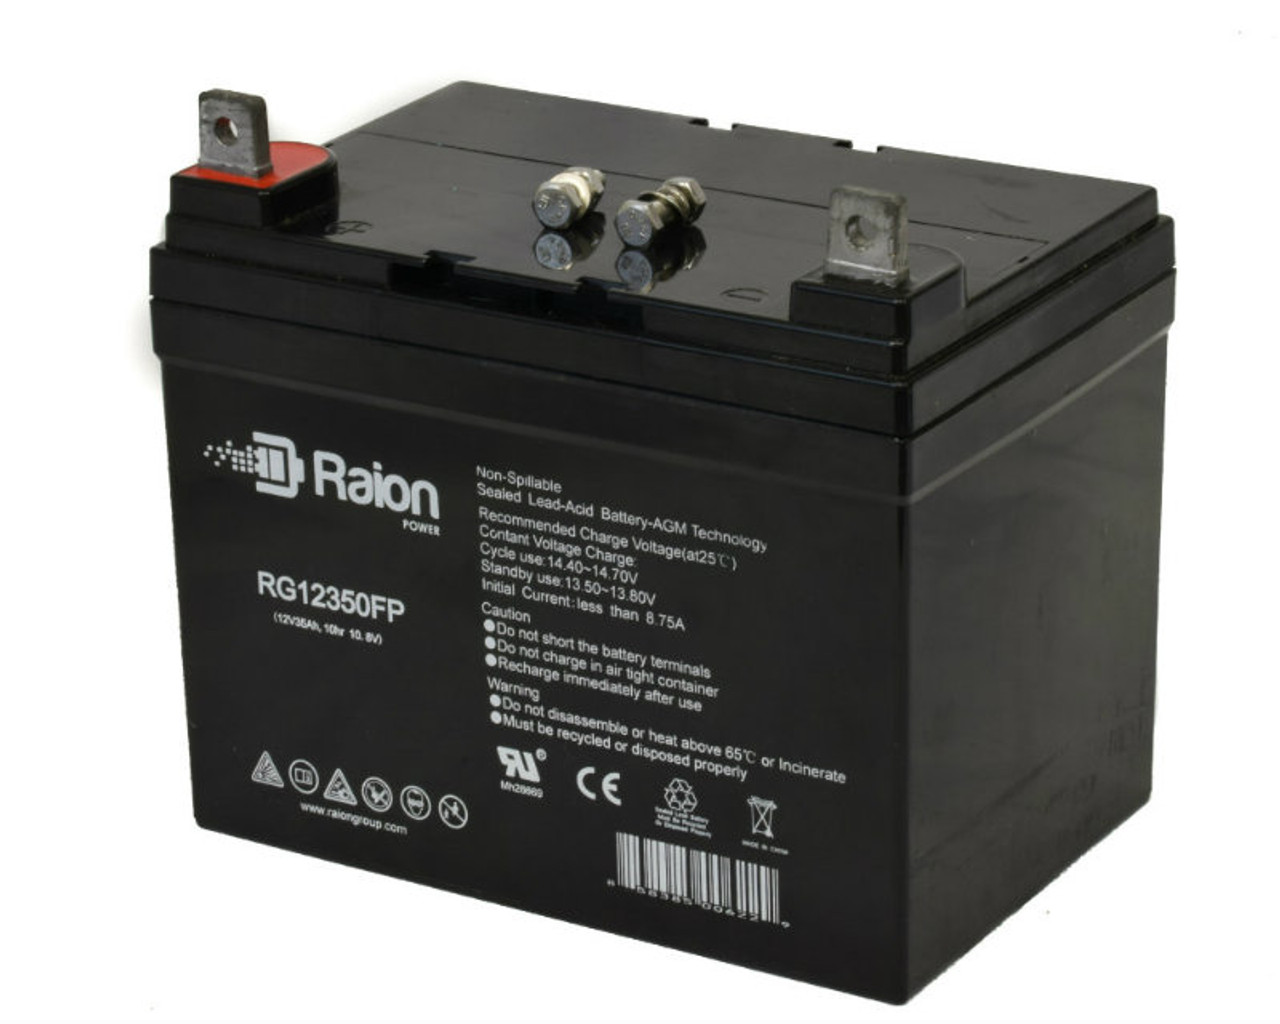 Raion Power Replacement 12V 35Ah RG12350FP Battery for Bruno VPL-3214B Vertical Platform Wheelchair Lift